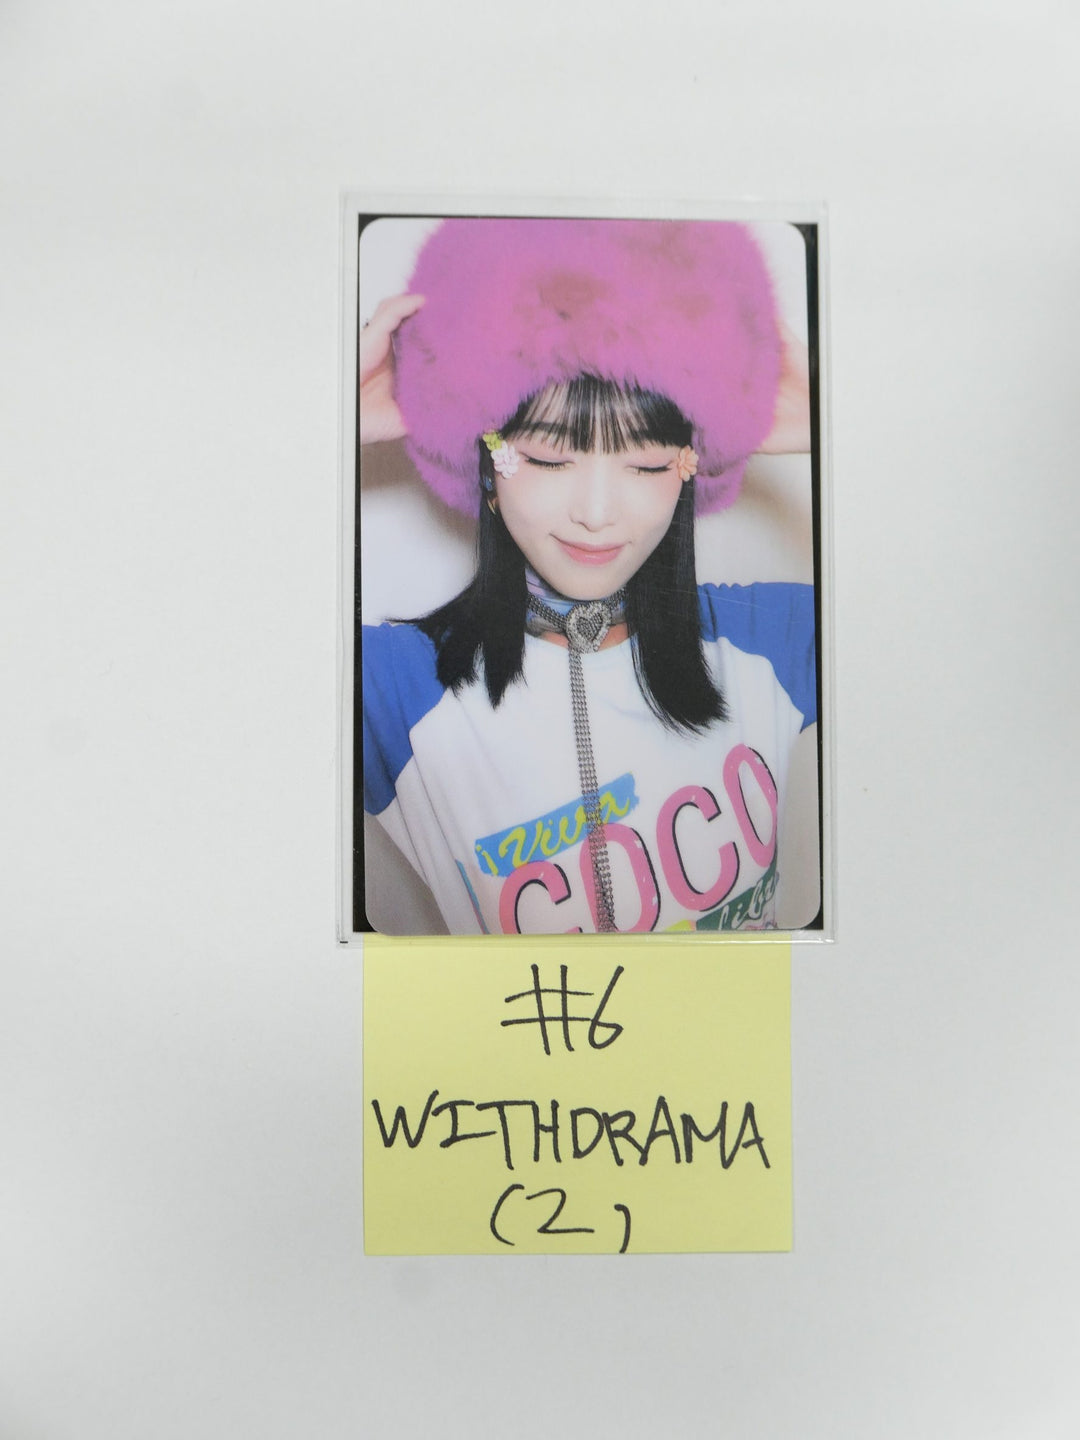 YENA "ˣ‿ˣ (SMiLEY)" - Withdrama Luckydraw Plastic PVC Photocard